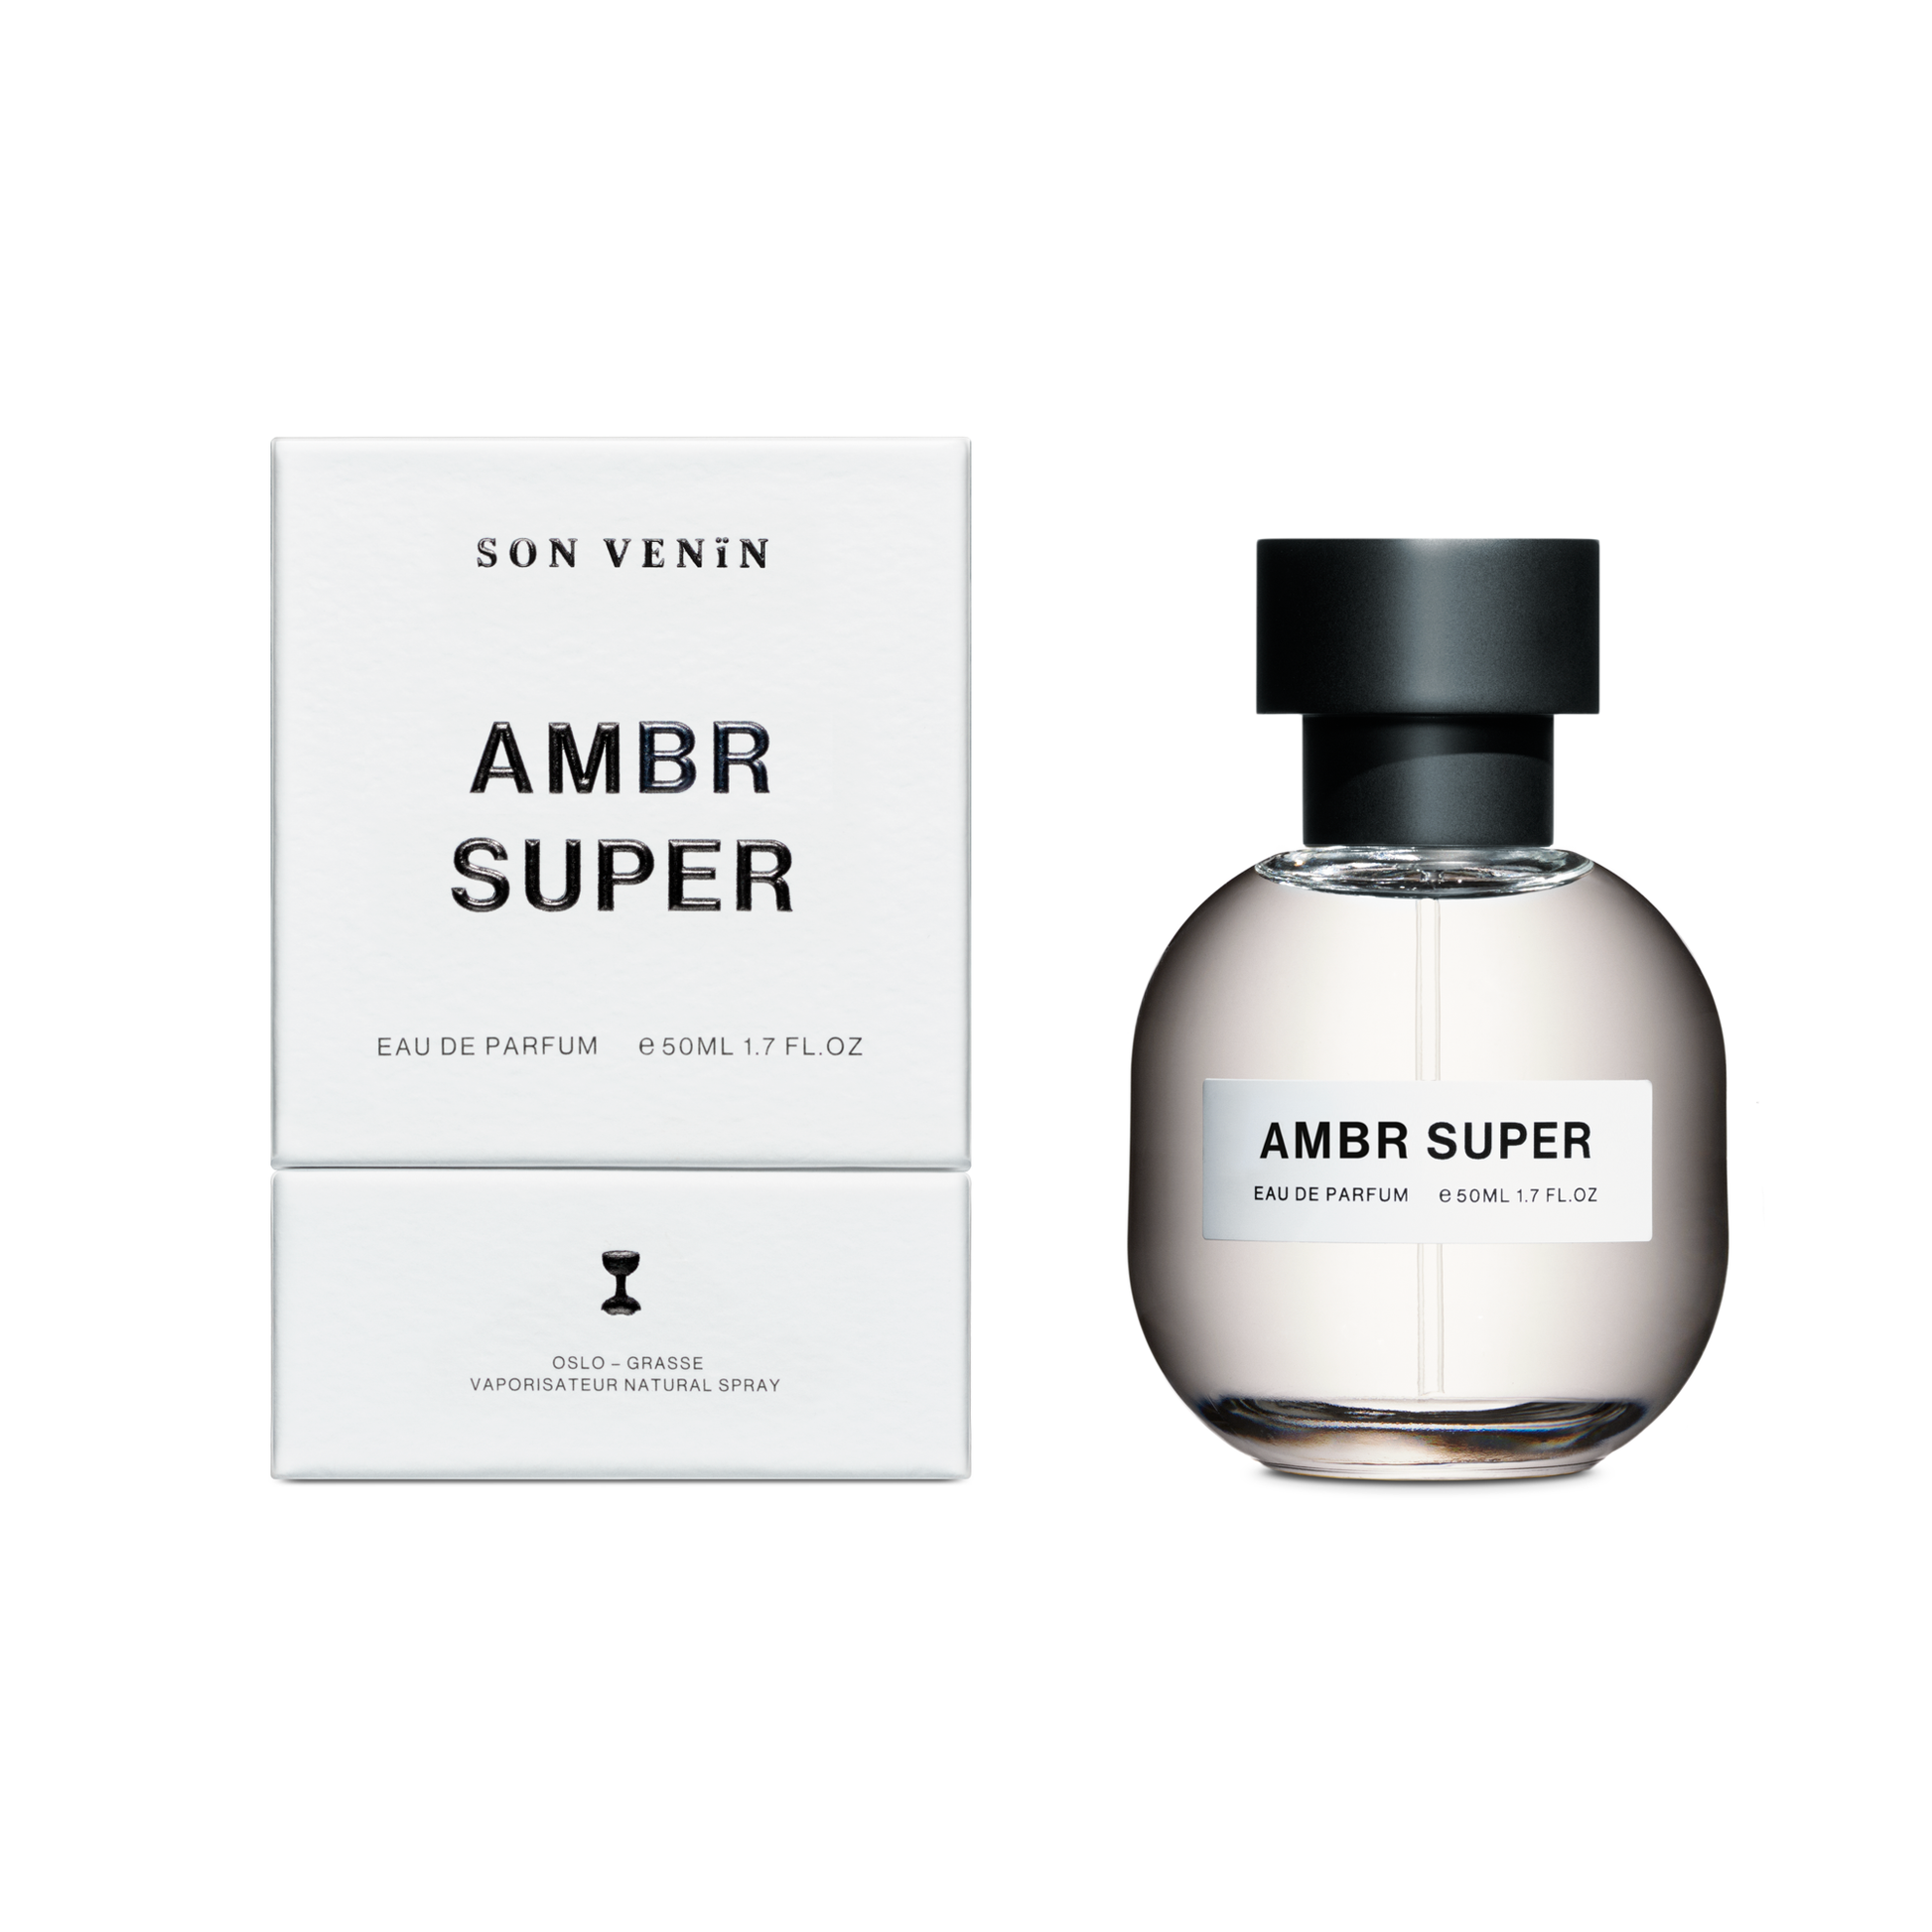 Son Venin AMBR SUPER Bottle and Packaging